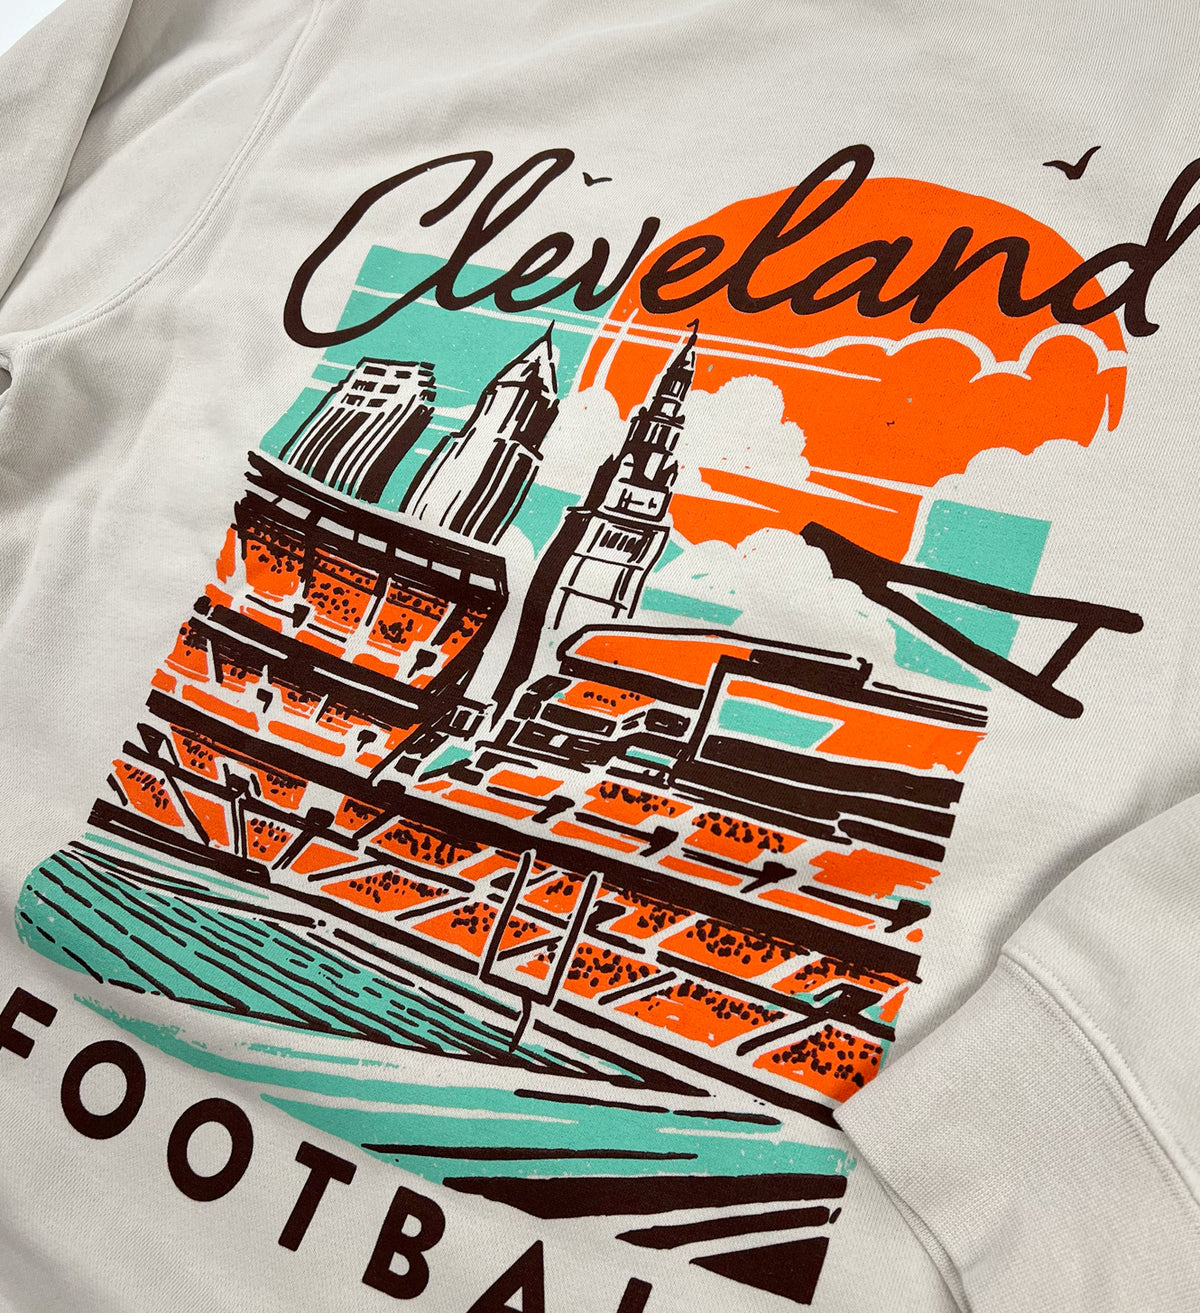 GV Art and Design Vintage Cleveland Baseball Navy T Shirt XXLarge